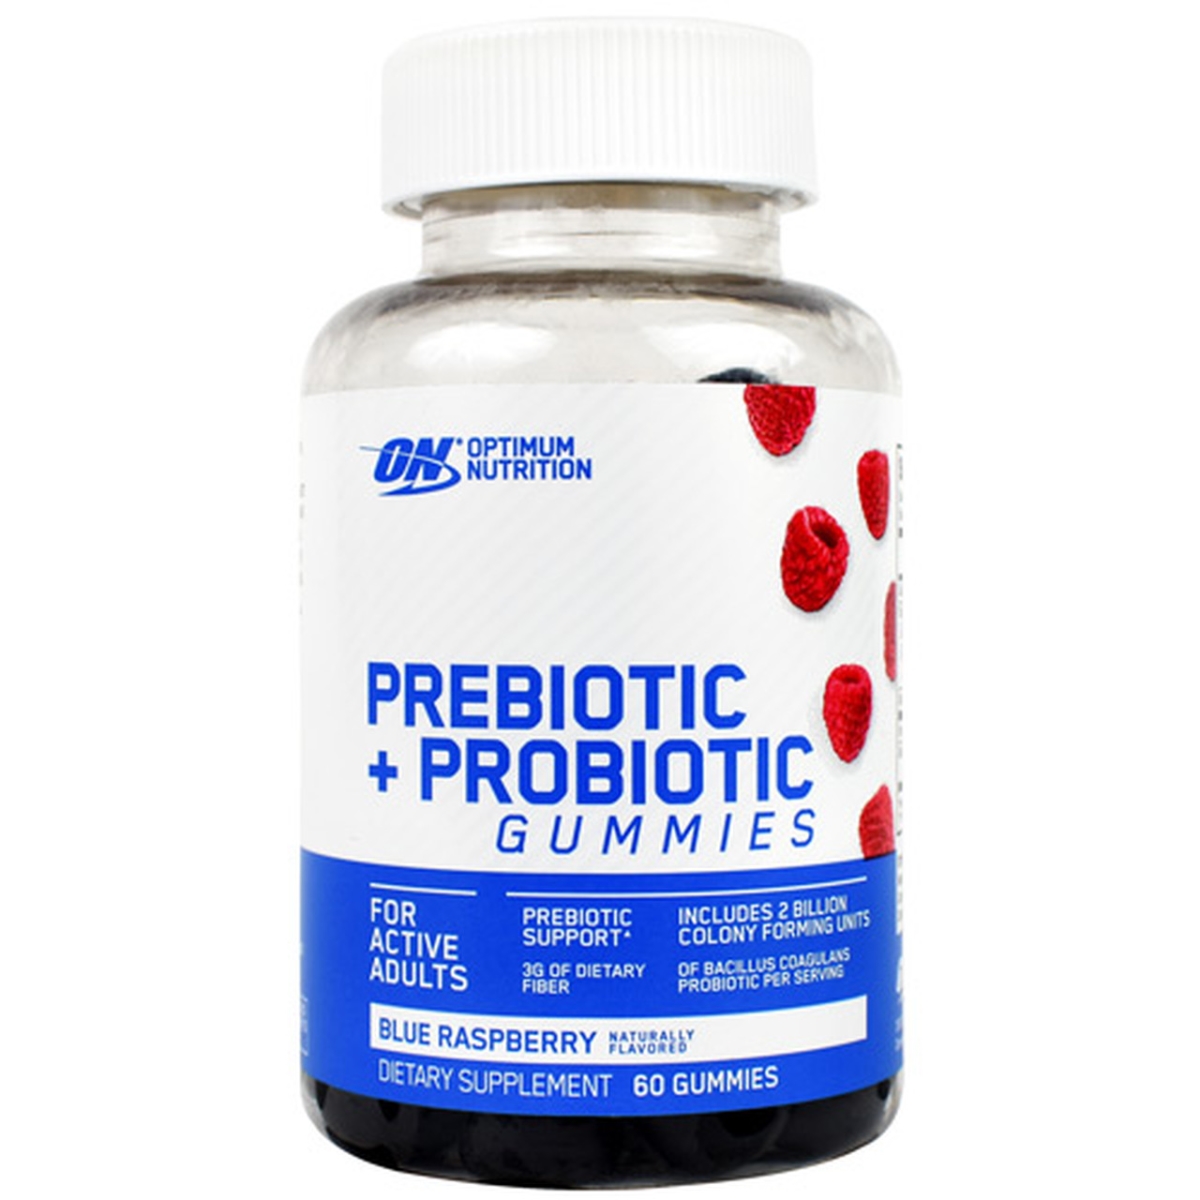 2730690 Immunity Plus Probiotic Gummies, Blue Raspberry - 60 Count